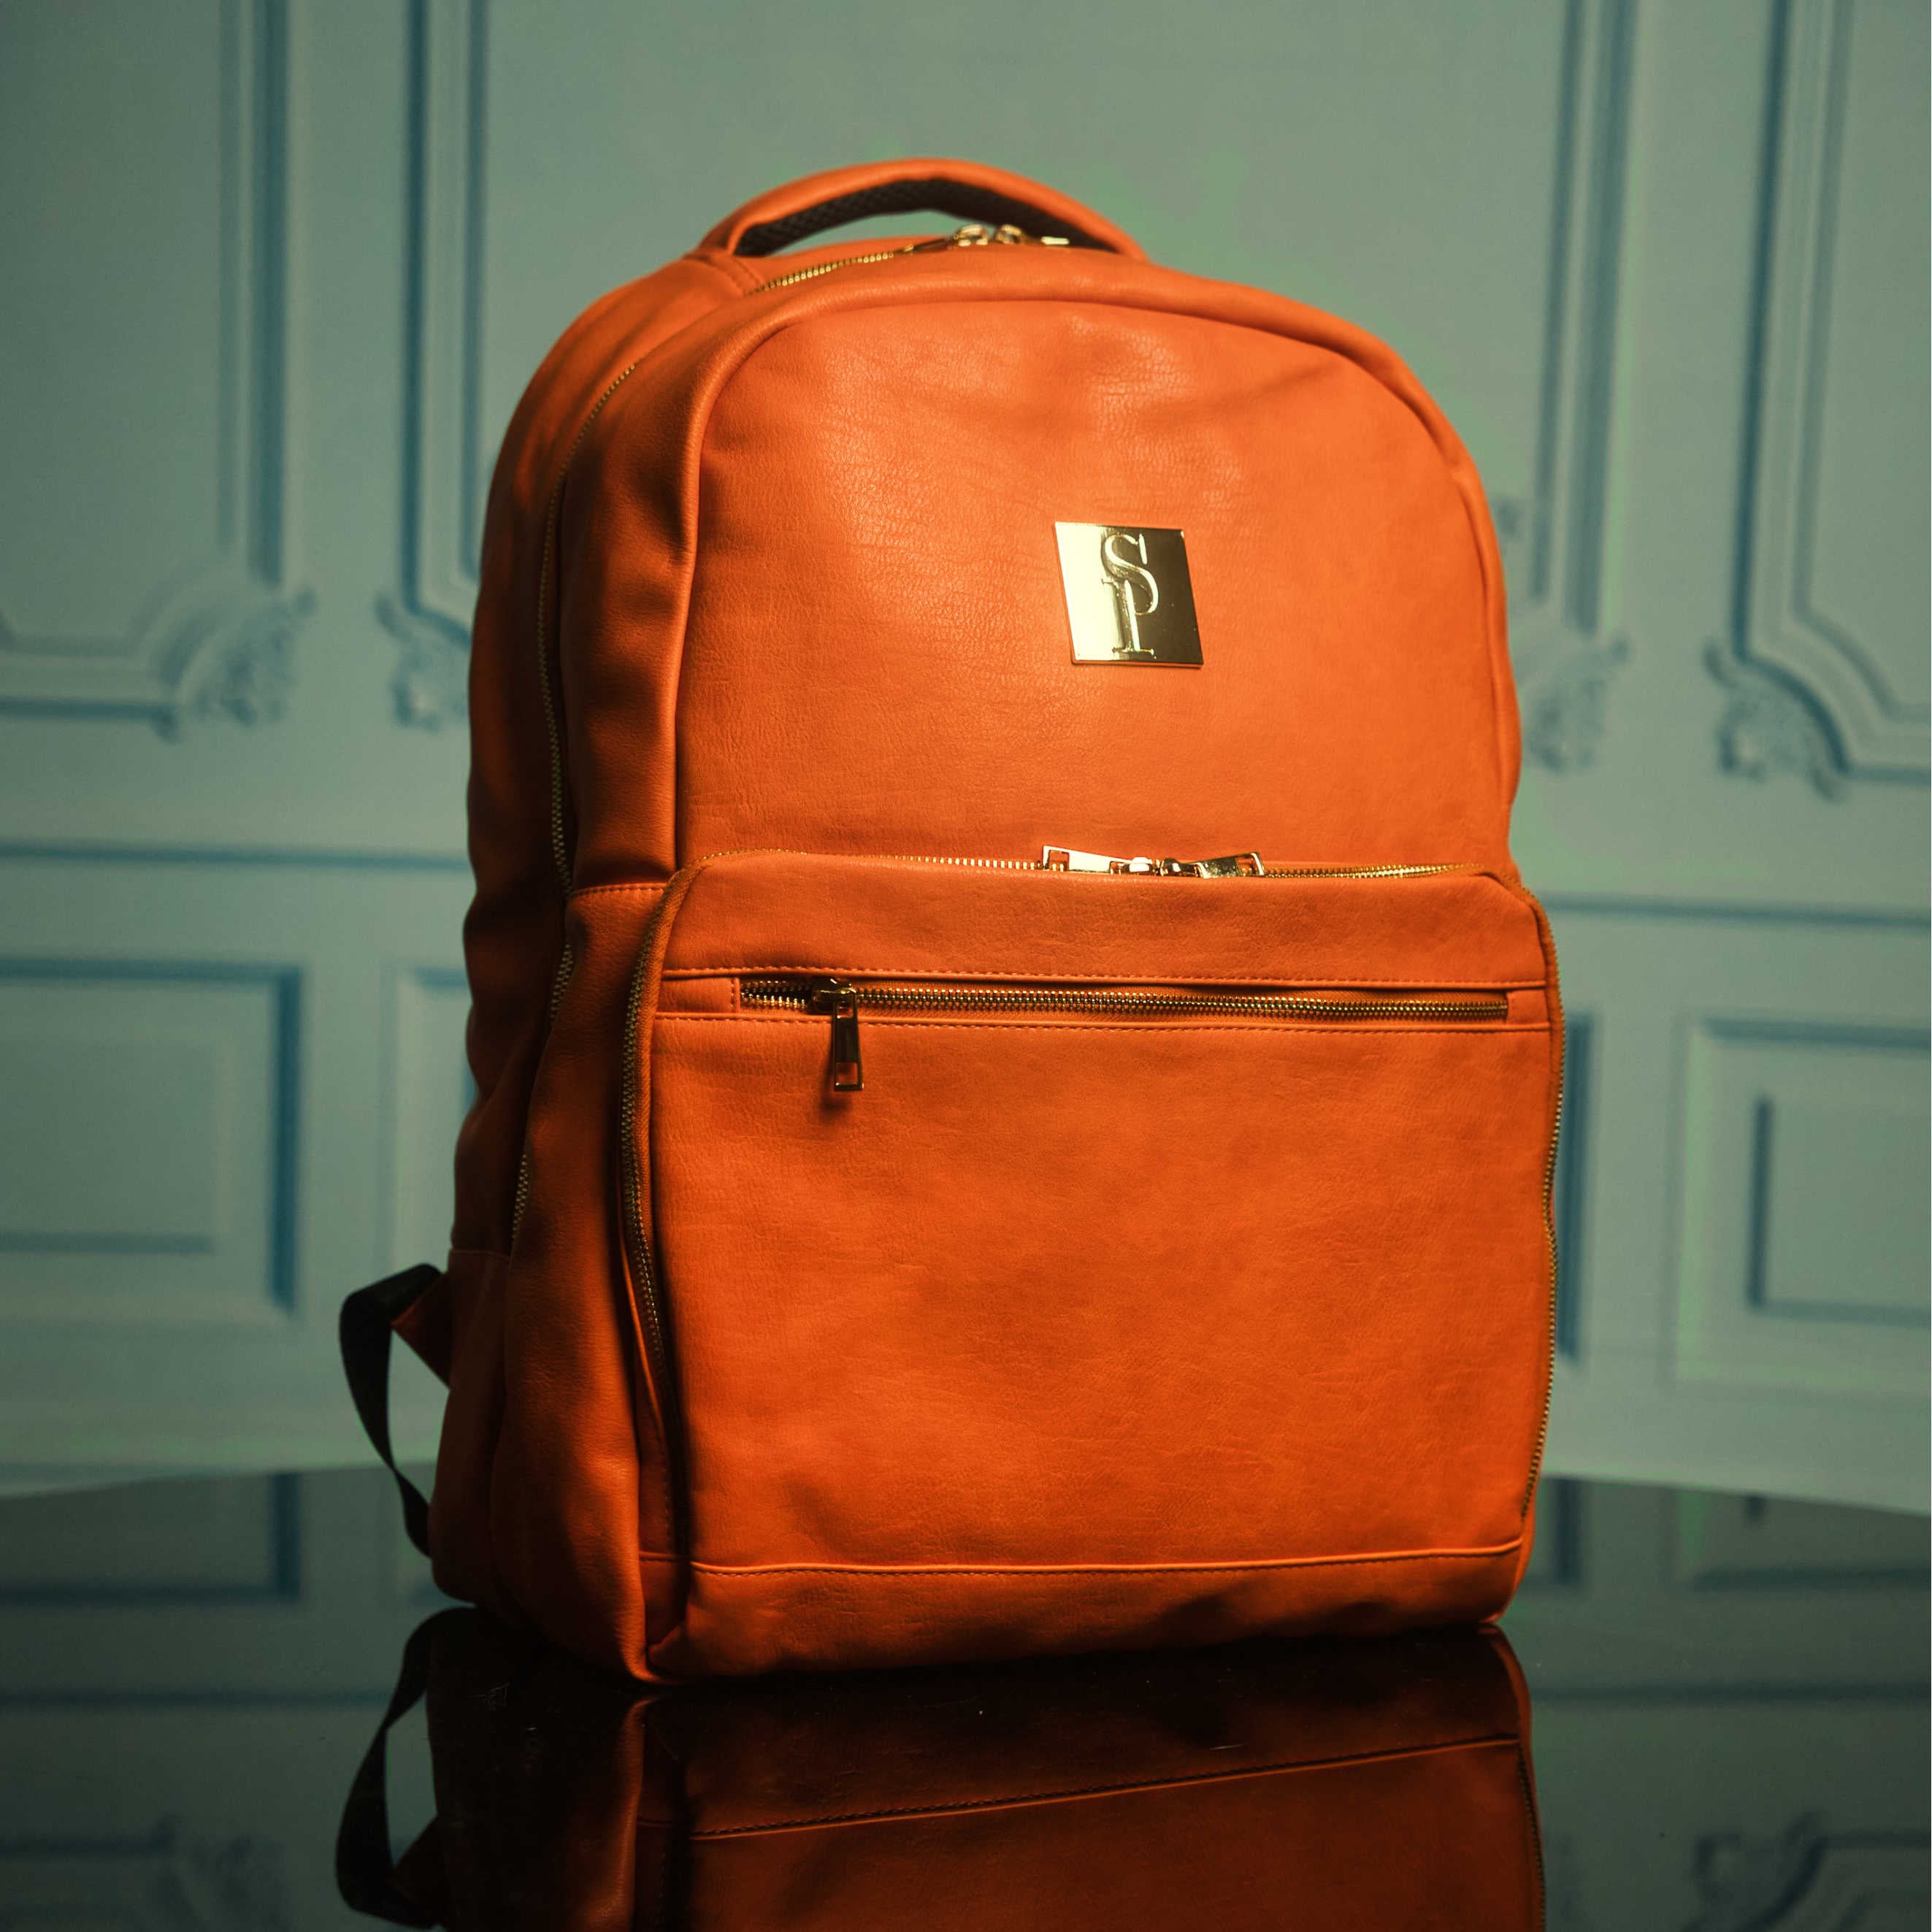 Orange Tumbled Leather Daily Commuter Bag - Sole Premise